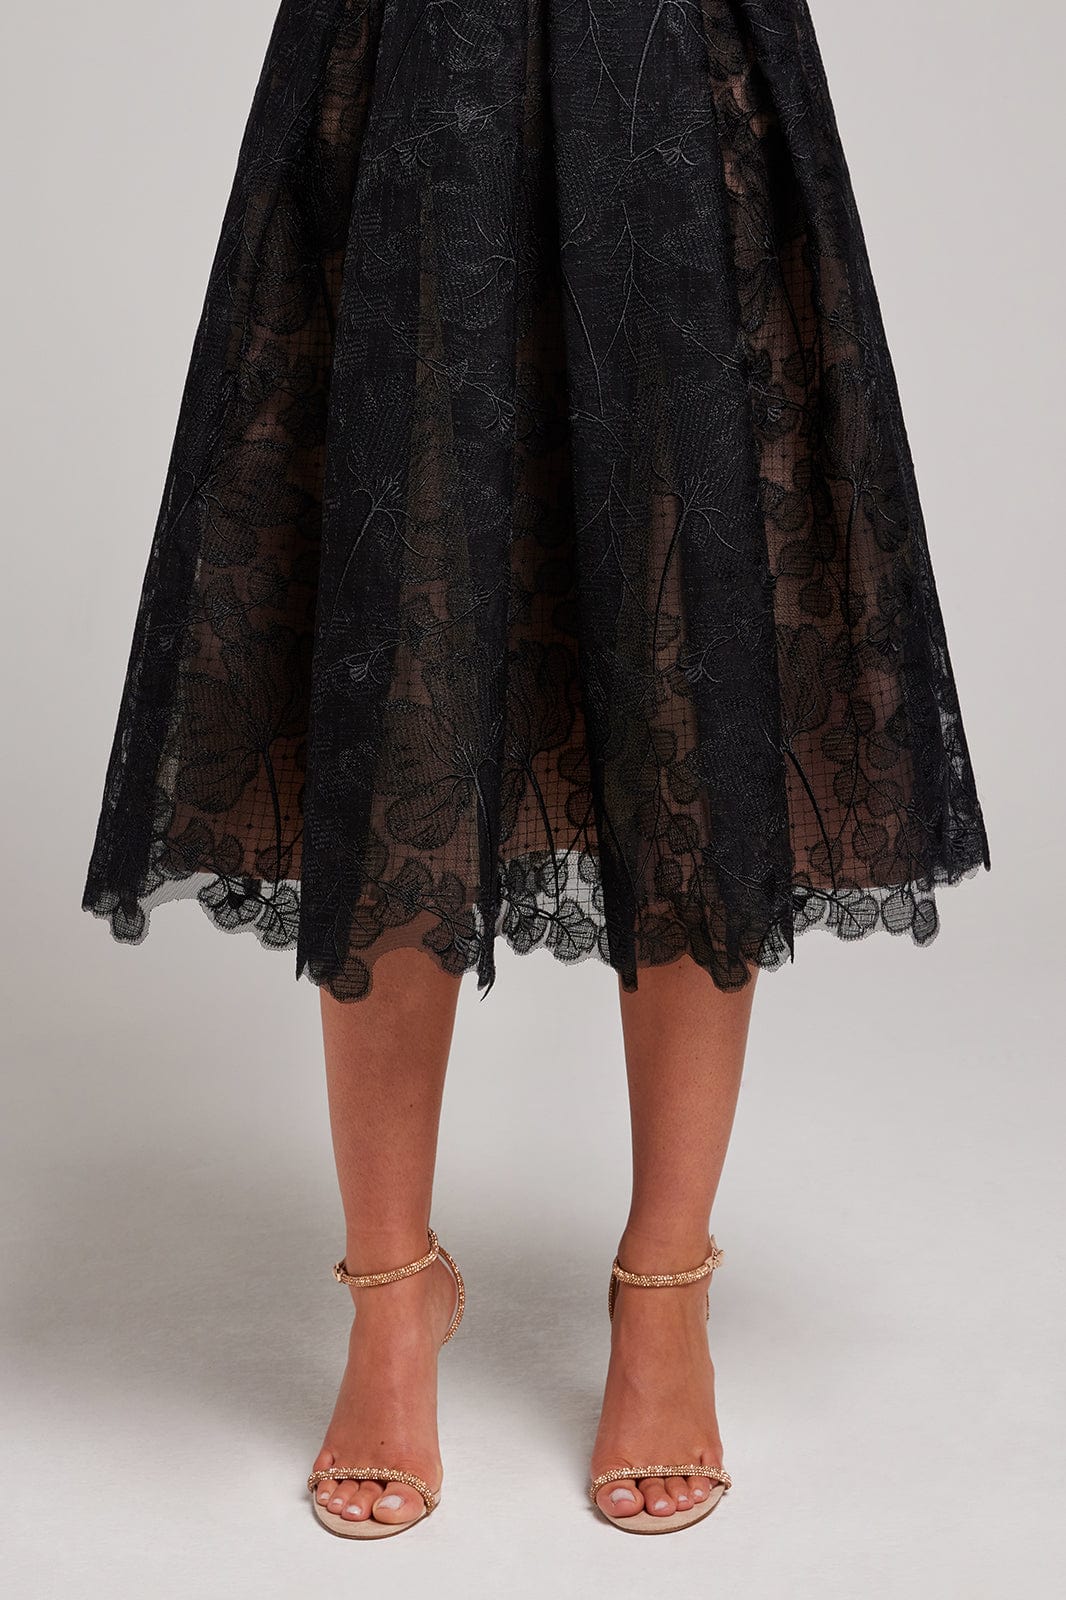 Olivia Black Dress